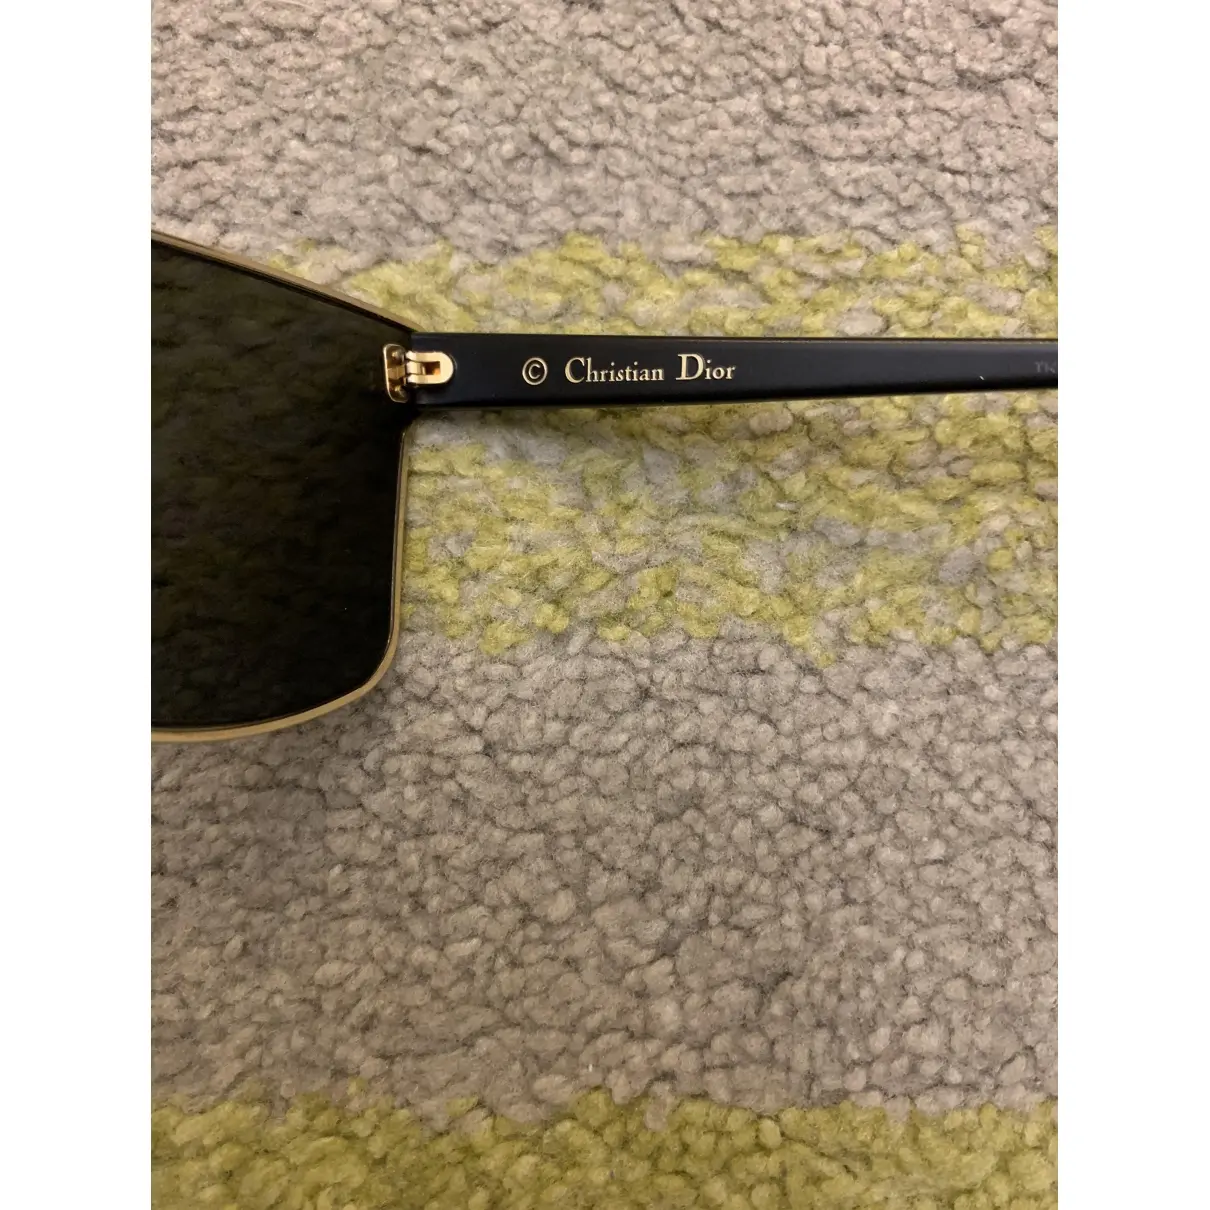 Buy Dior Diorizon aviator sunglasses online